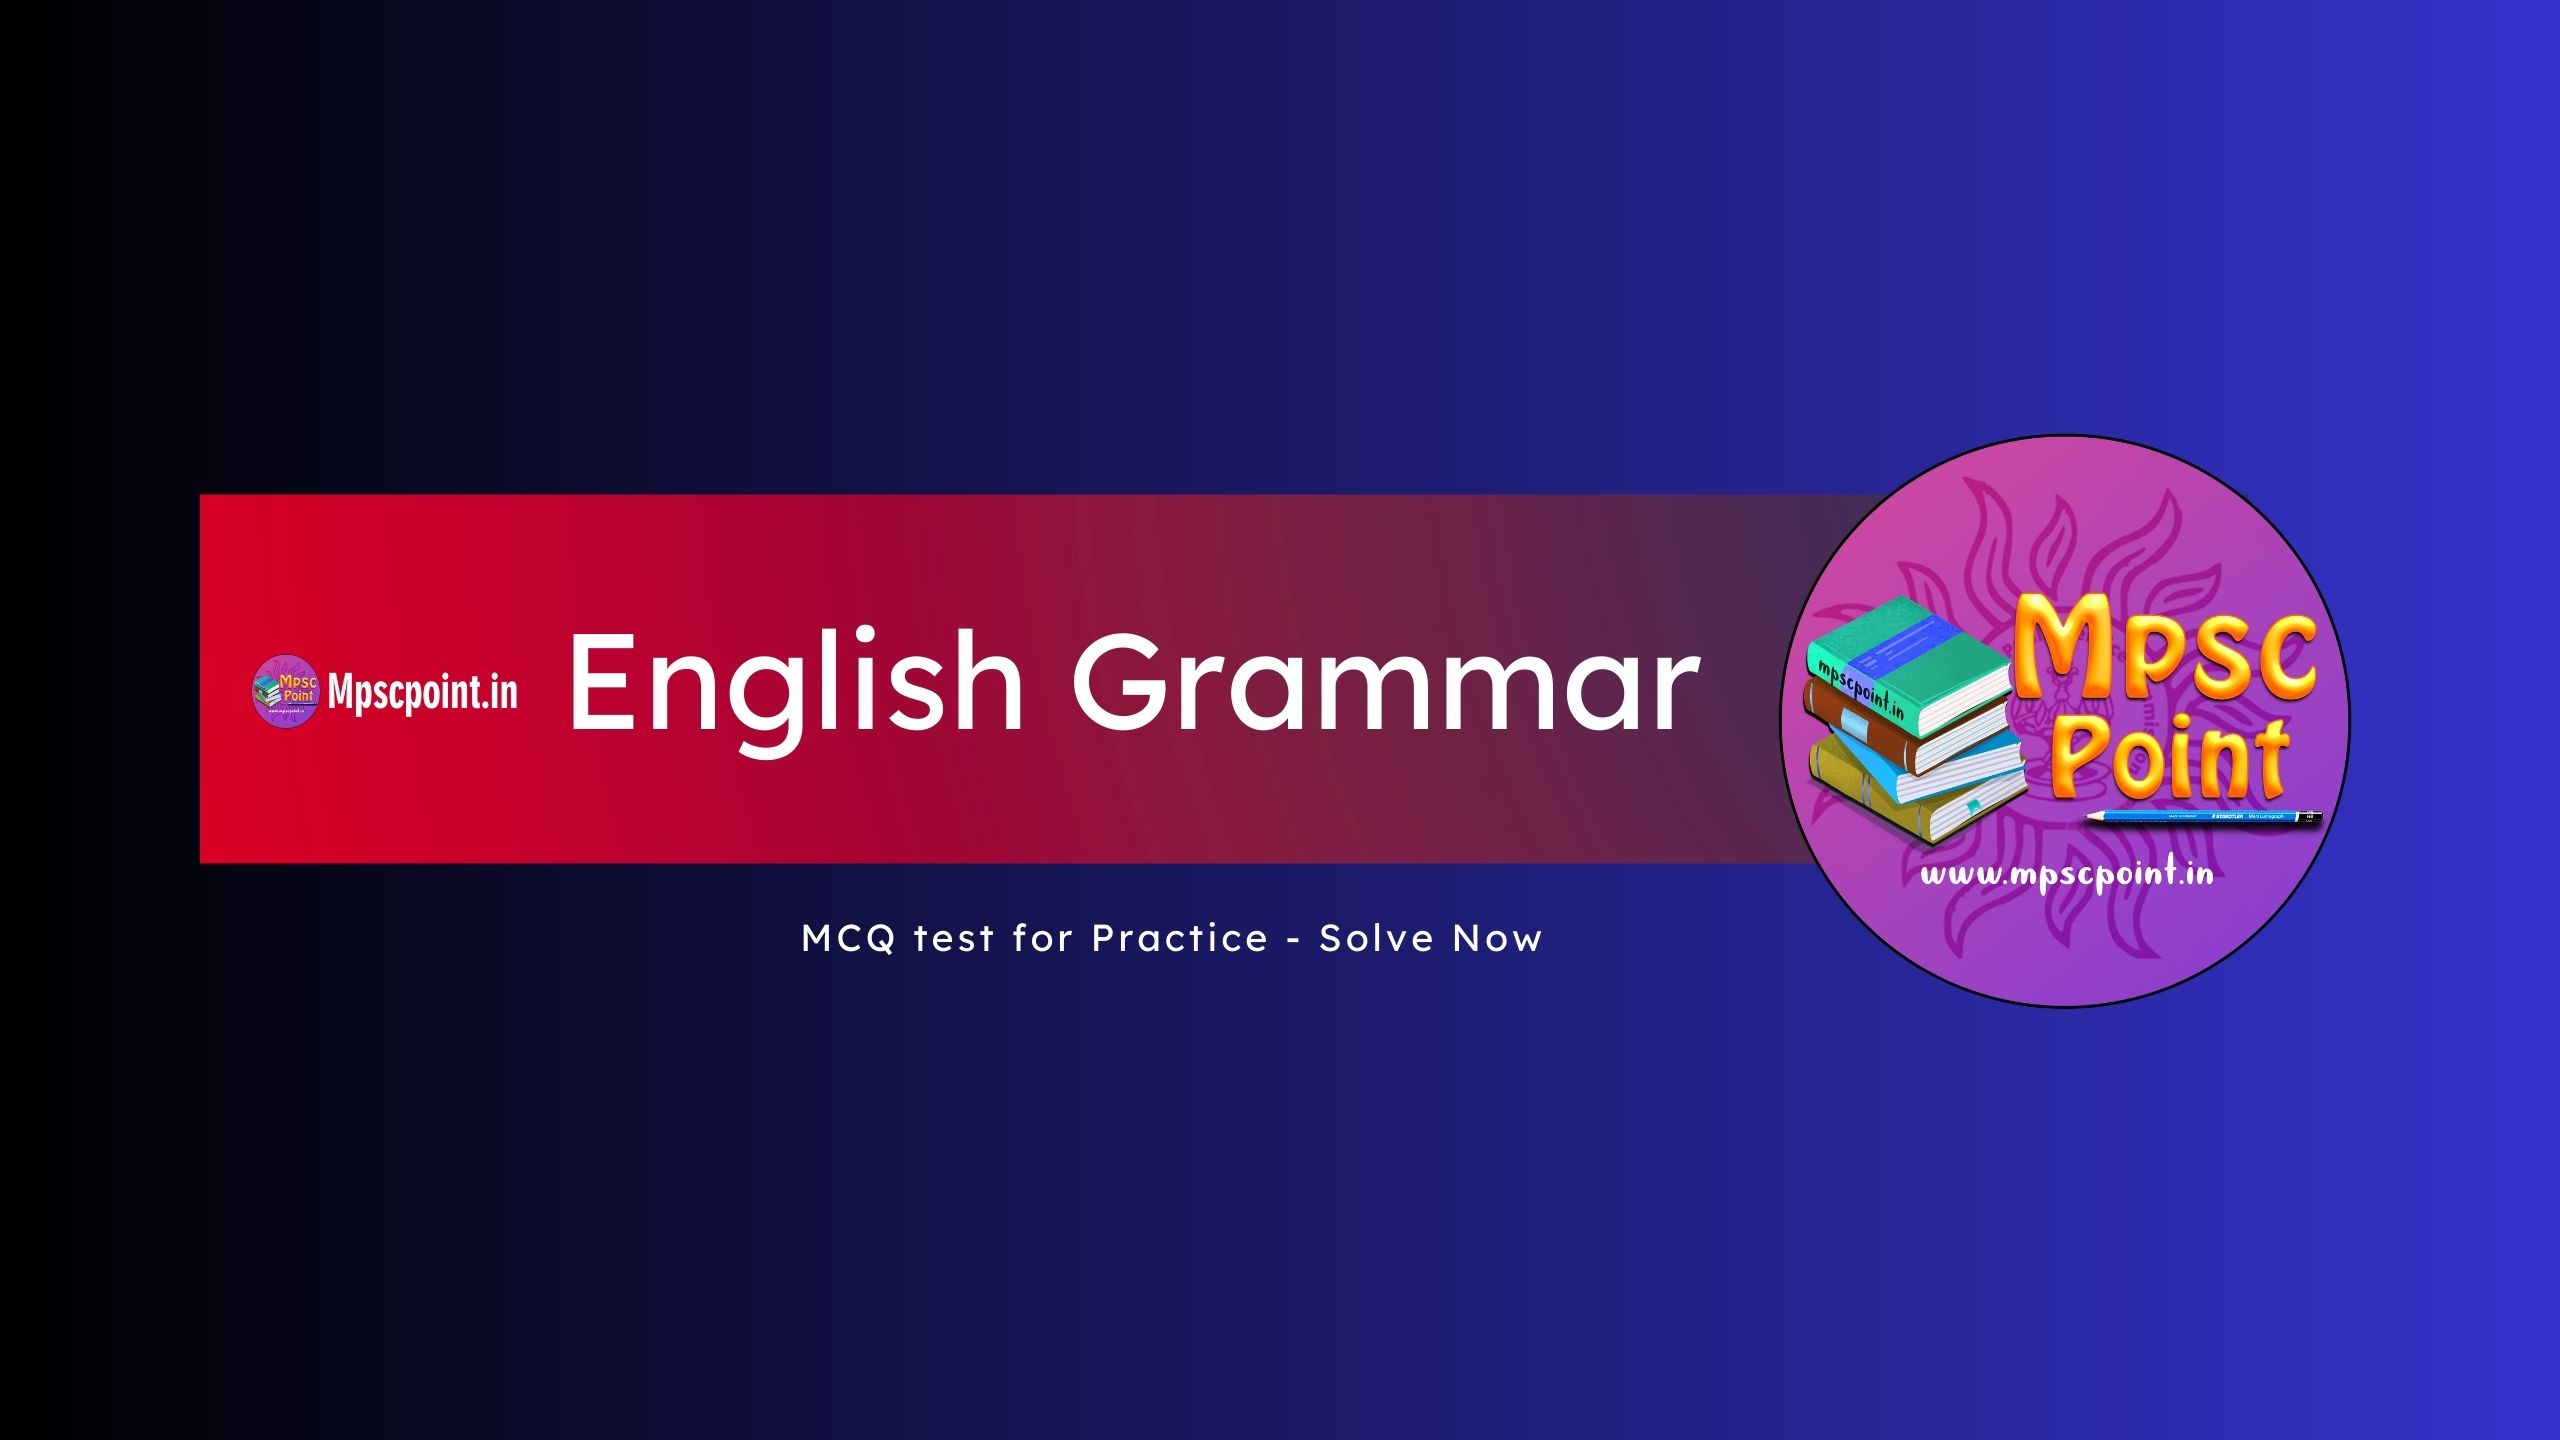 English Grammar MCQ test